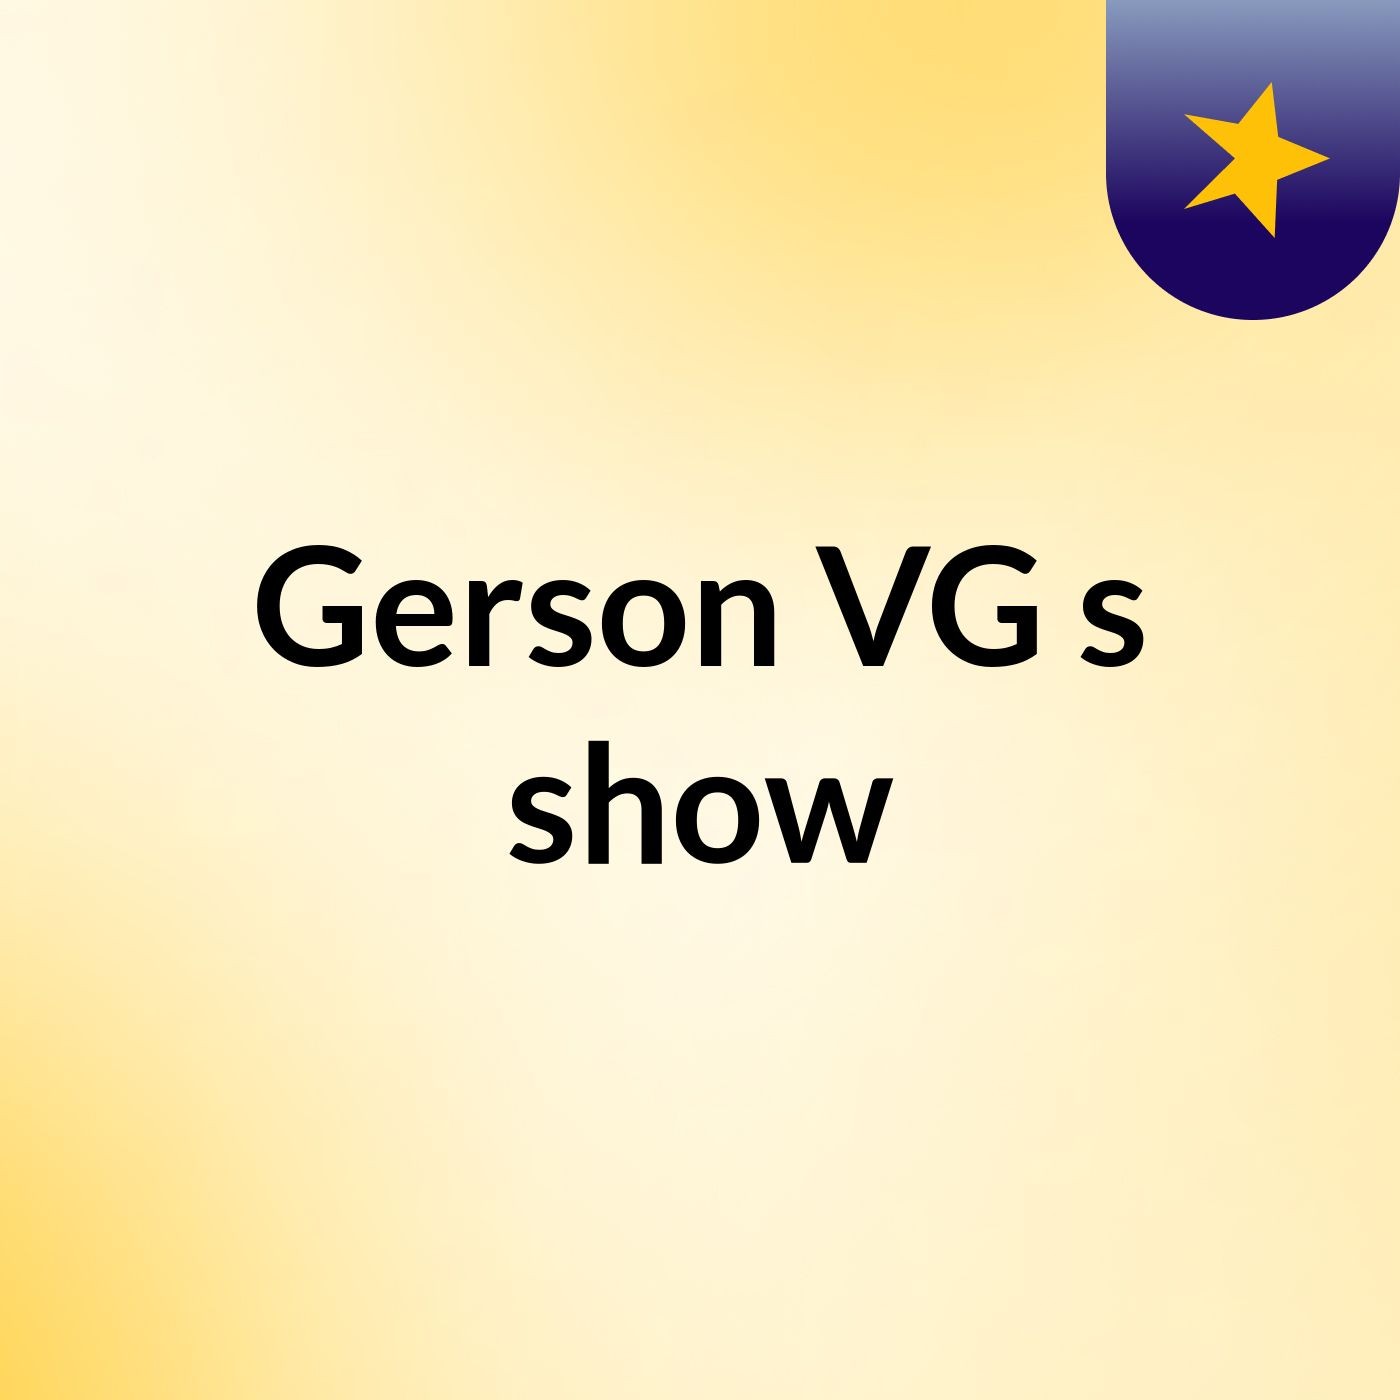 Gerson VG's show